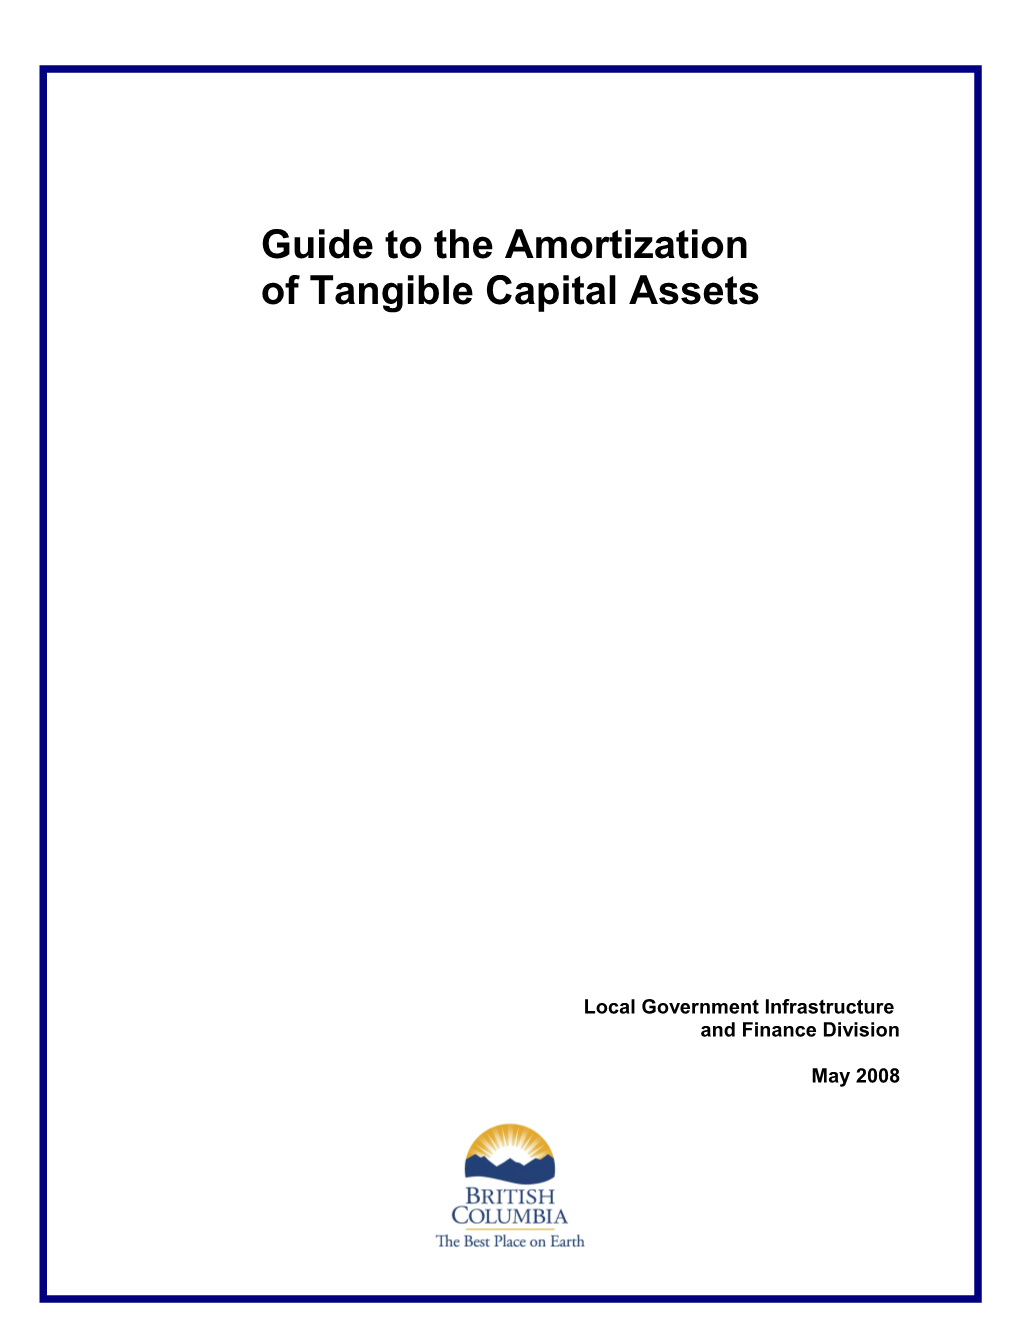 Amortizaion Of Tangible Capital Assets